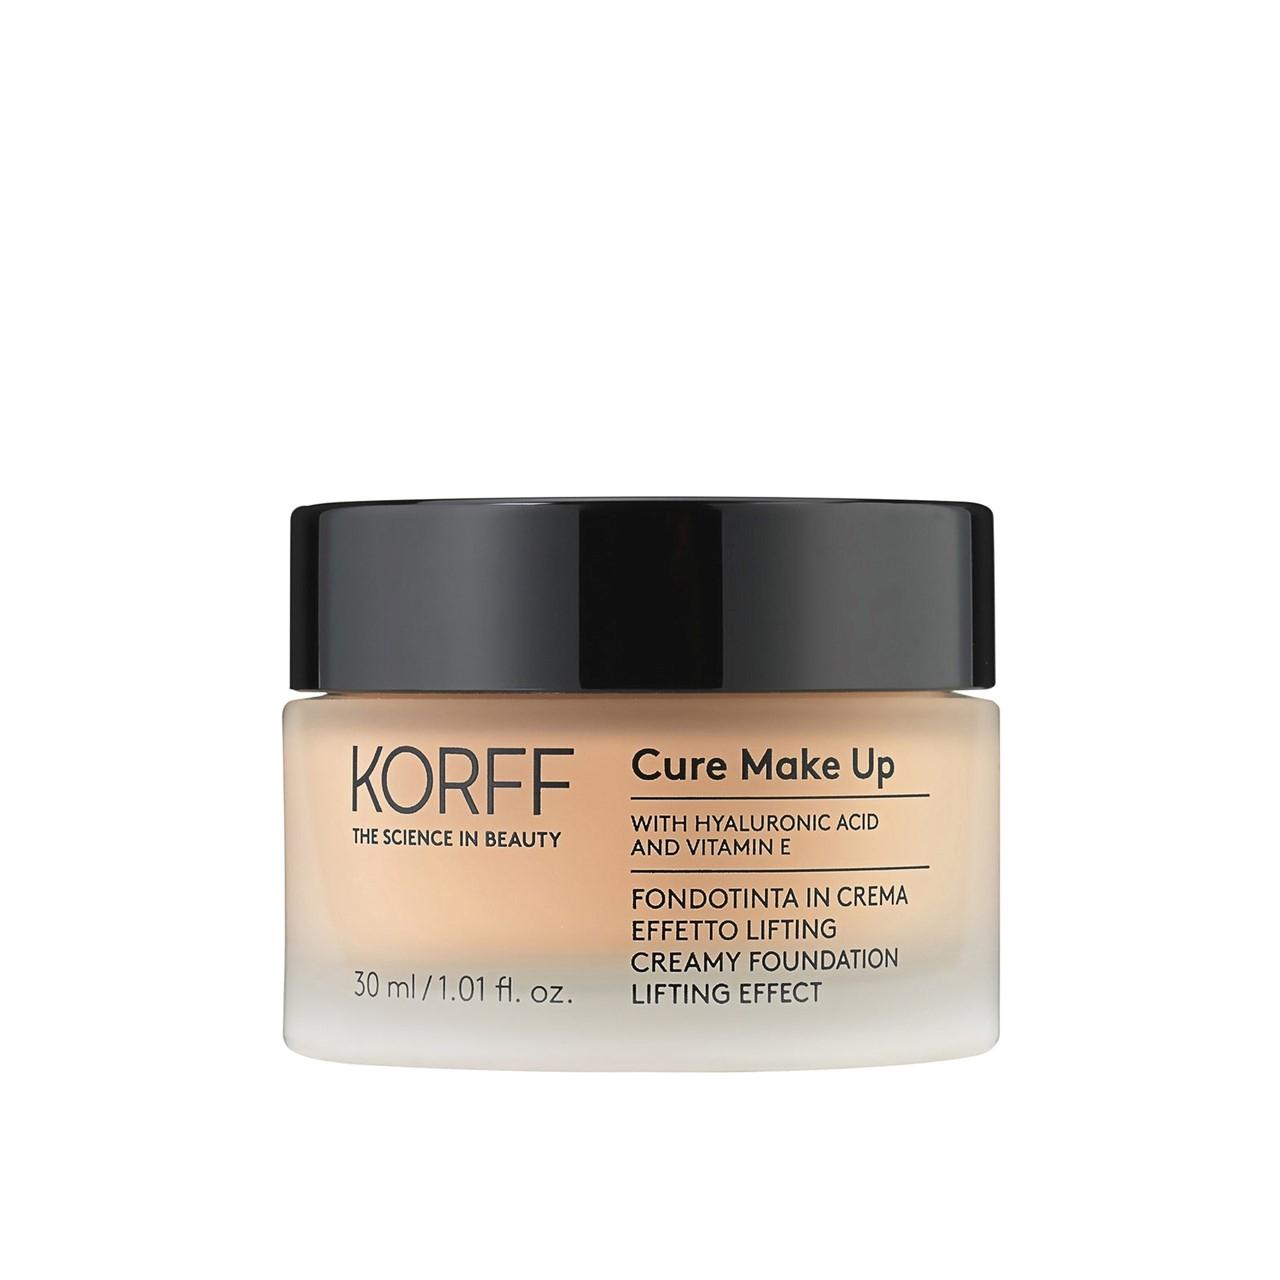 Korff Cure Make-Up Creamy Foundation Lifting Effect 04 30ml